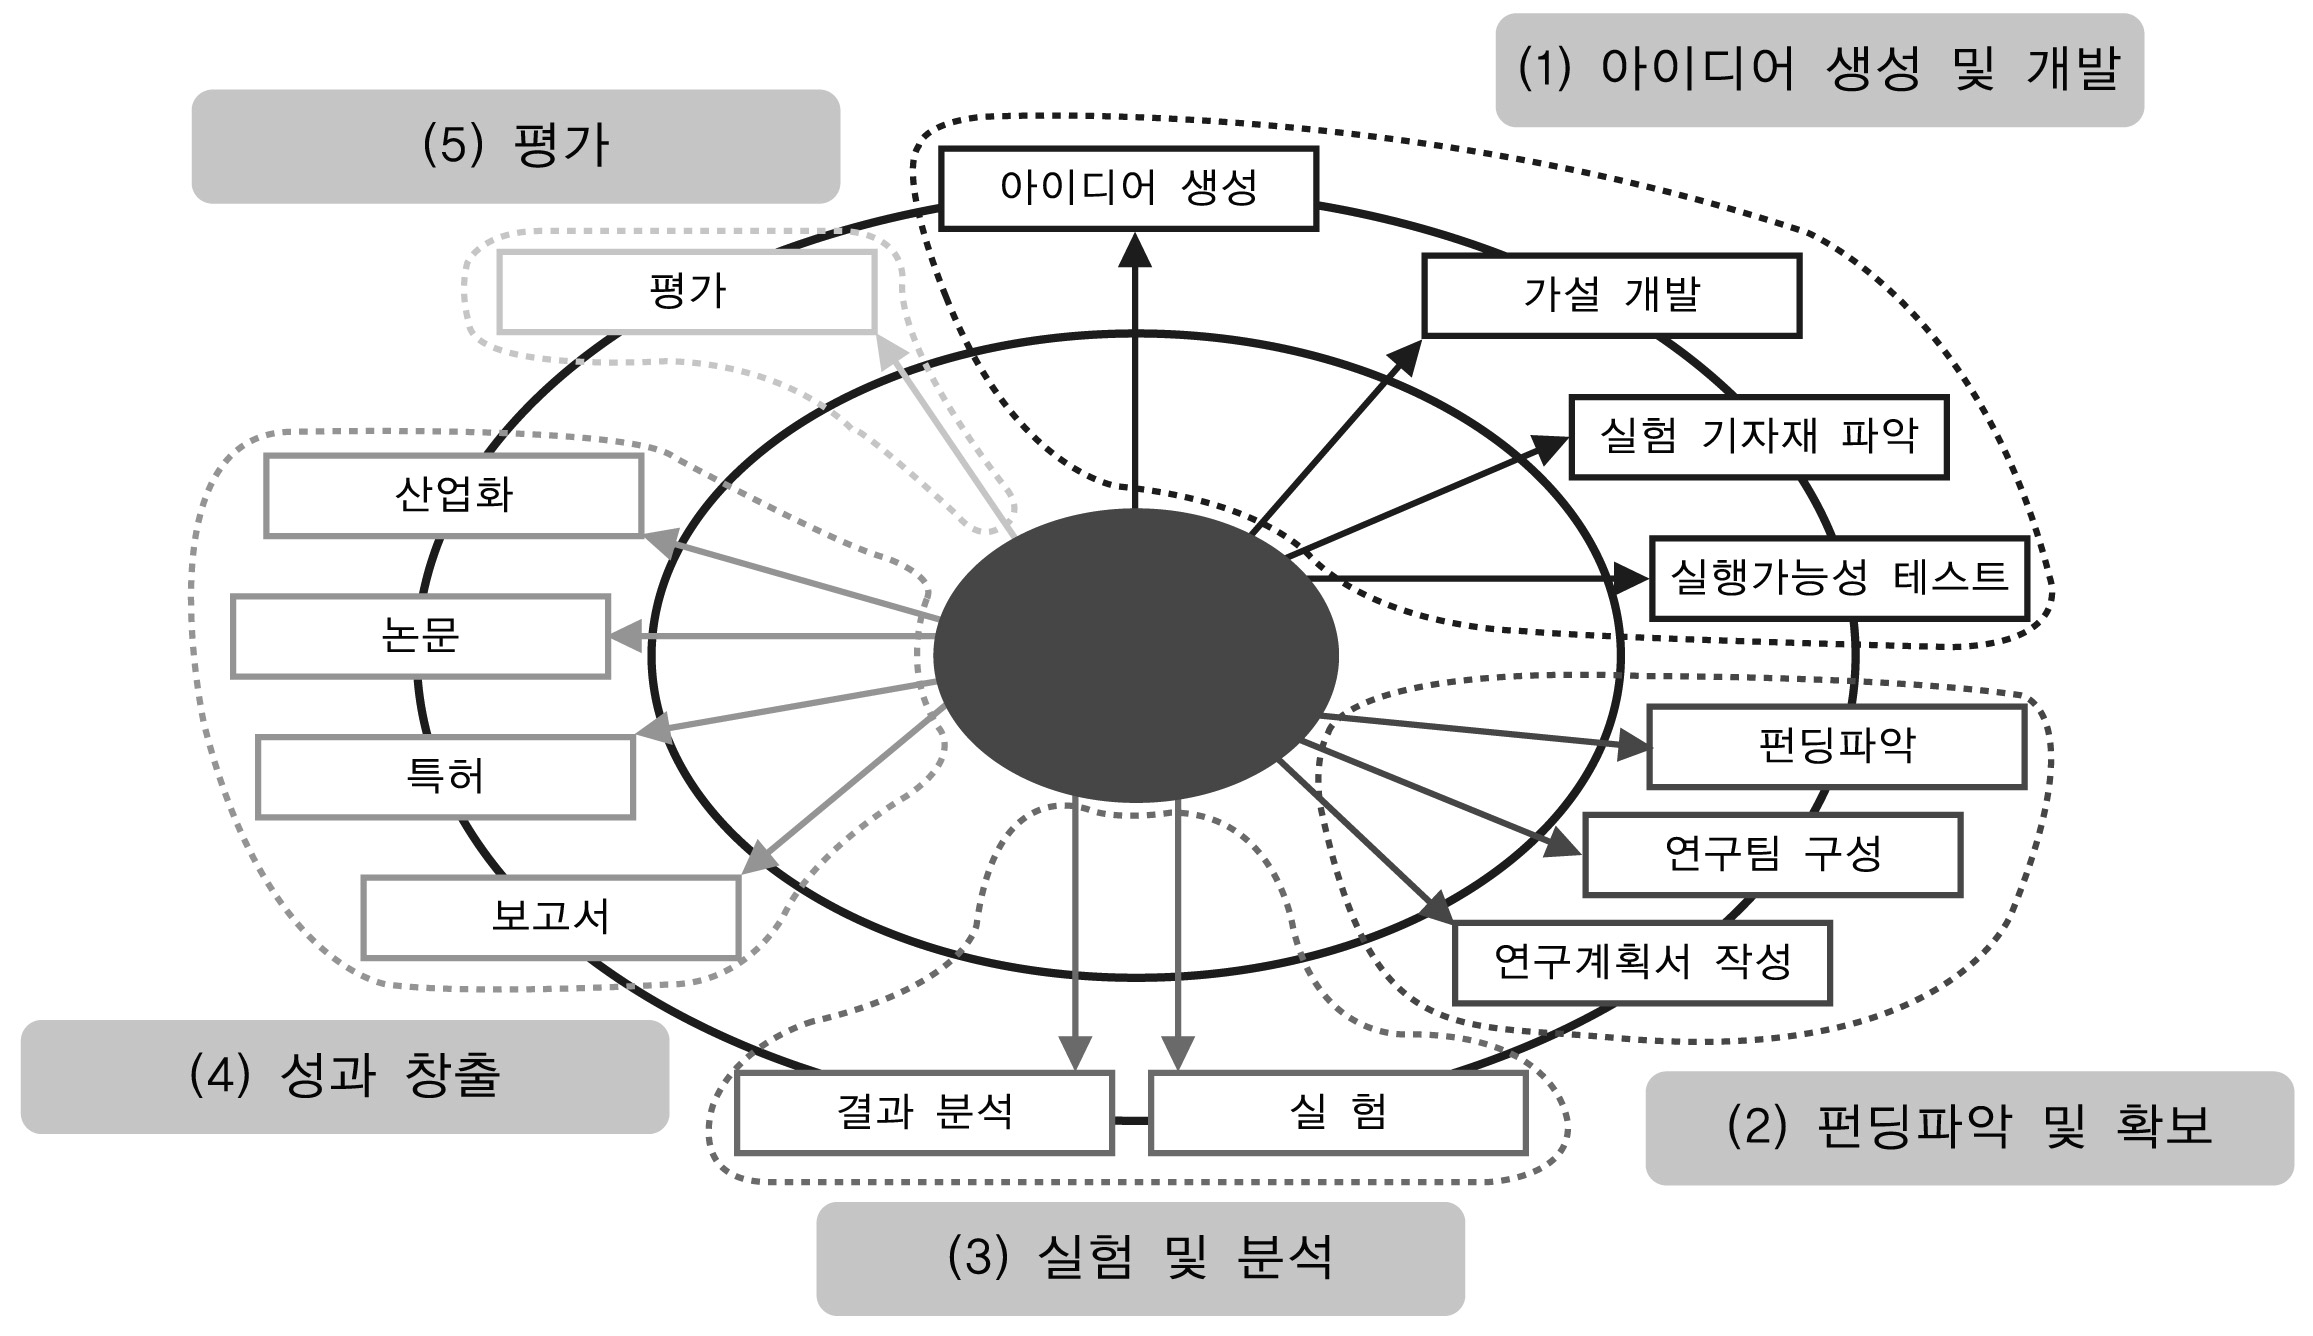 Activities in Korean Scientists' R&D life cycle